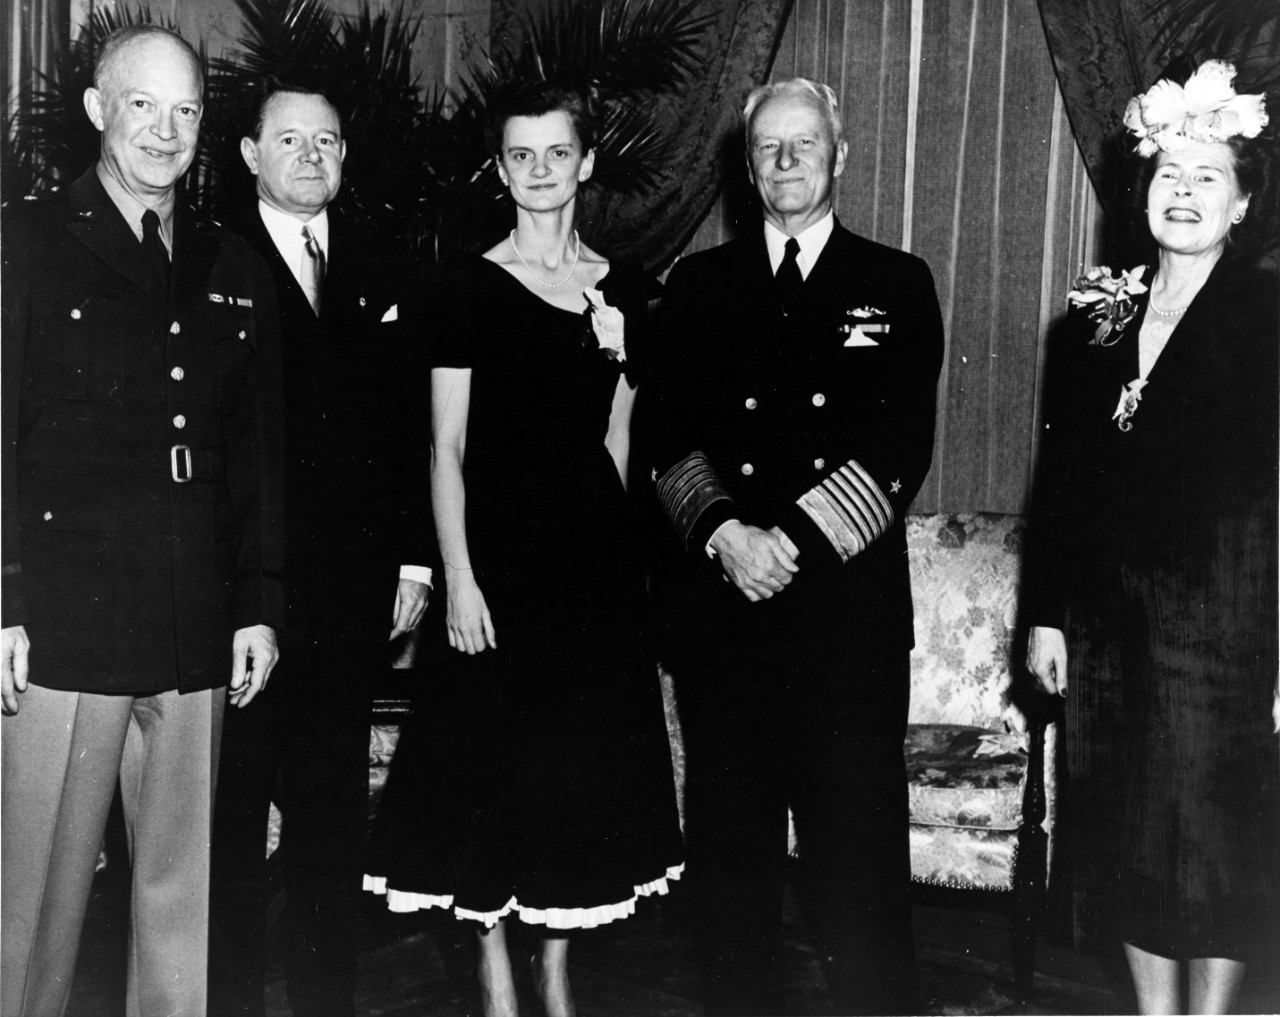 General D.D. Eisenhower, Secretary of Navy Sullivan, and Admiral Nimitz